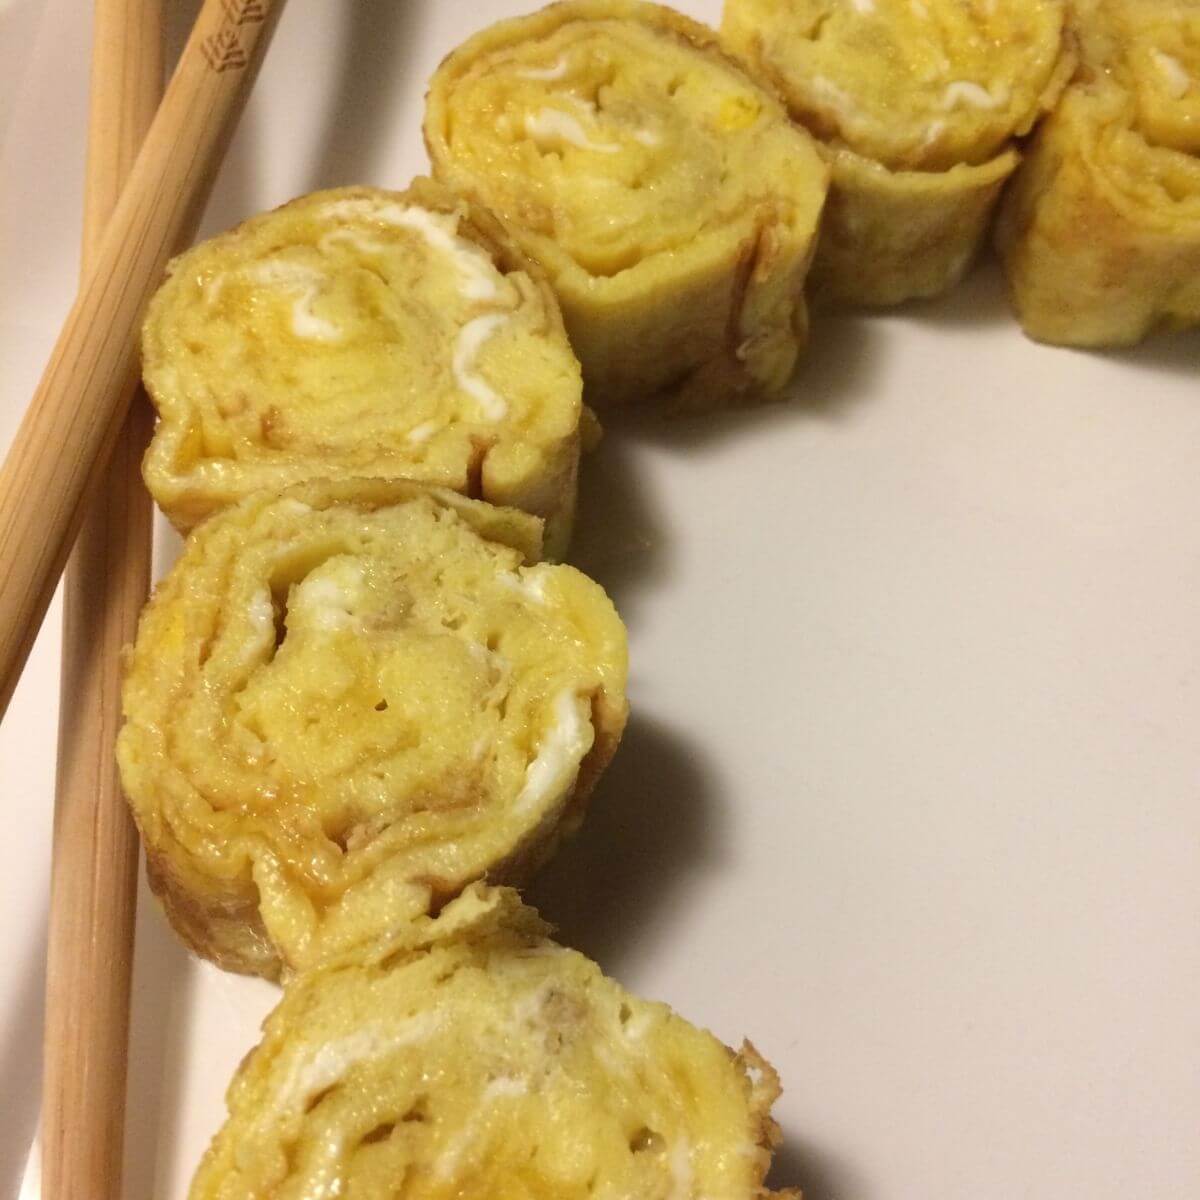 Home-Style Tamagoyaki (Japanese Rolled Omelette) Recipe